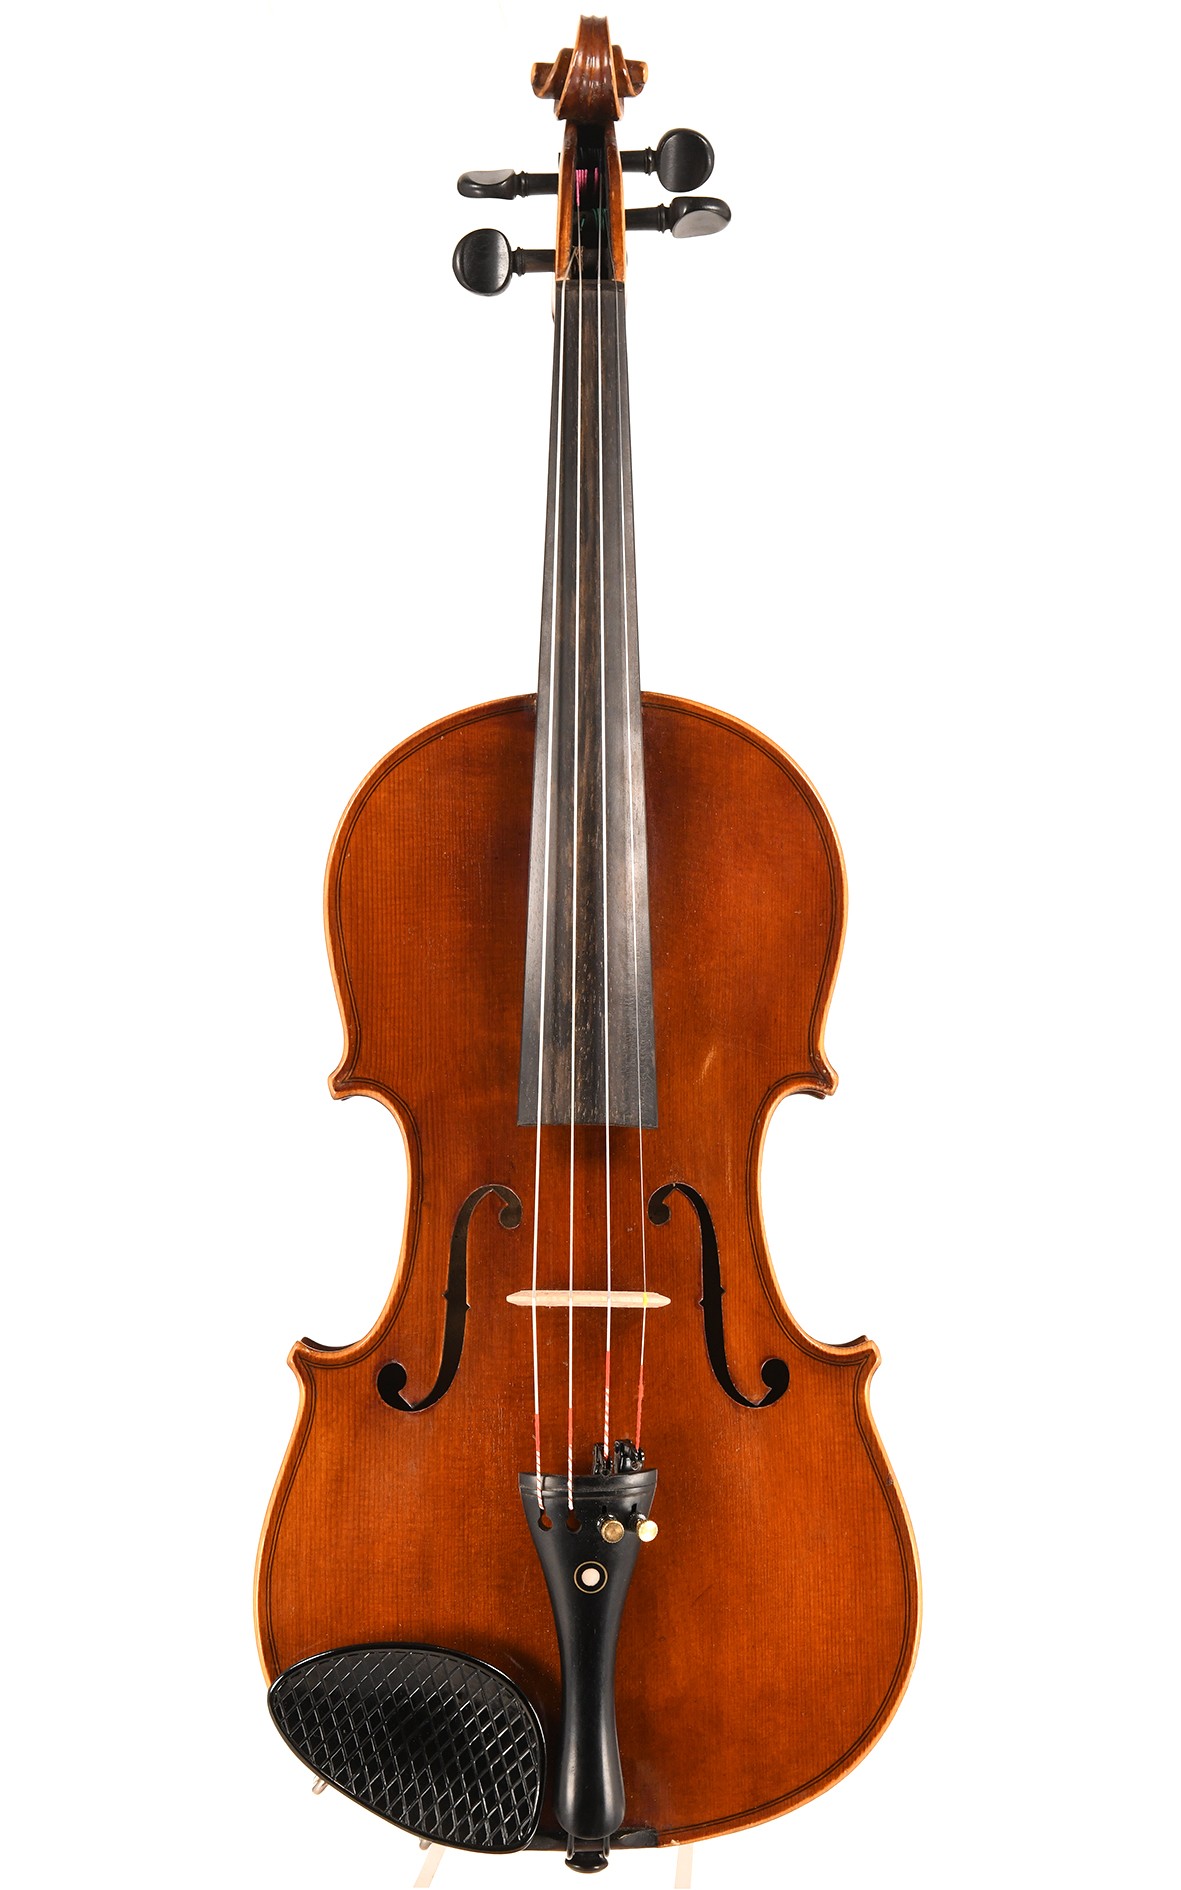 Vieux violon allemand d'après Antonio Stradivari, vers 1930